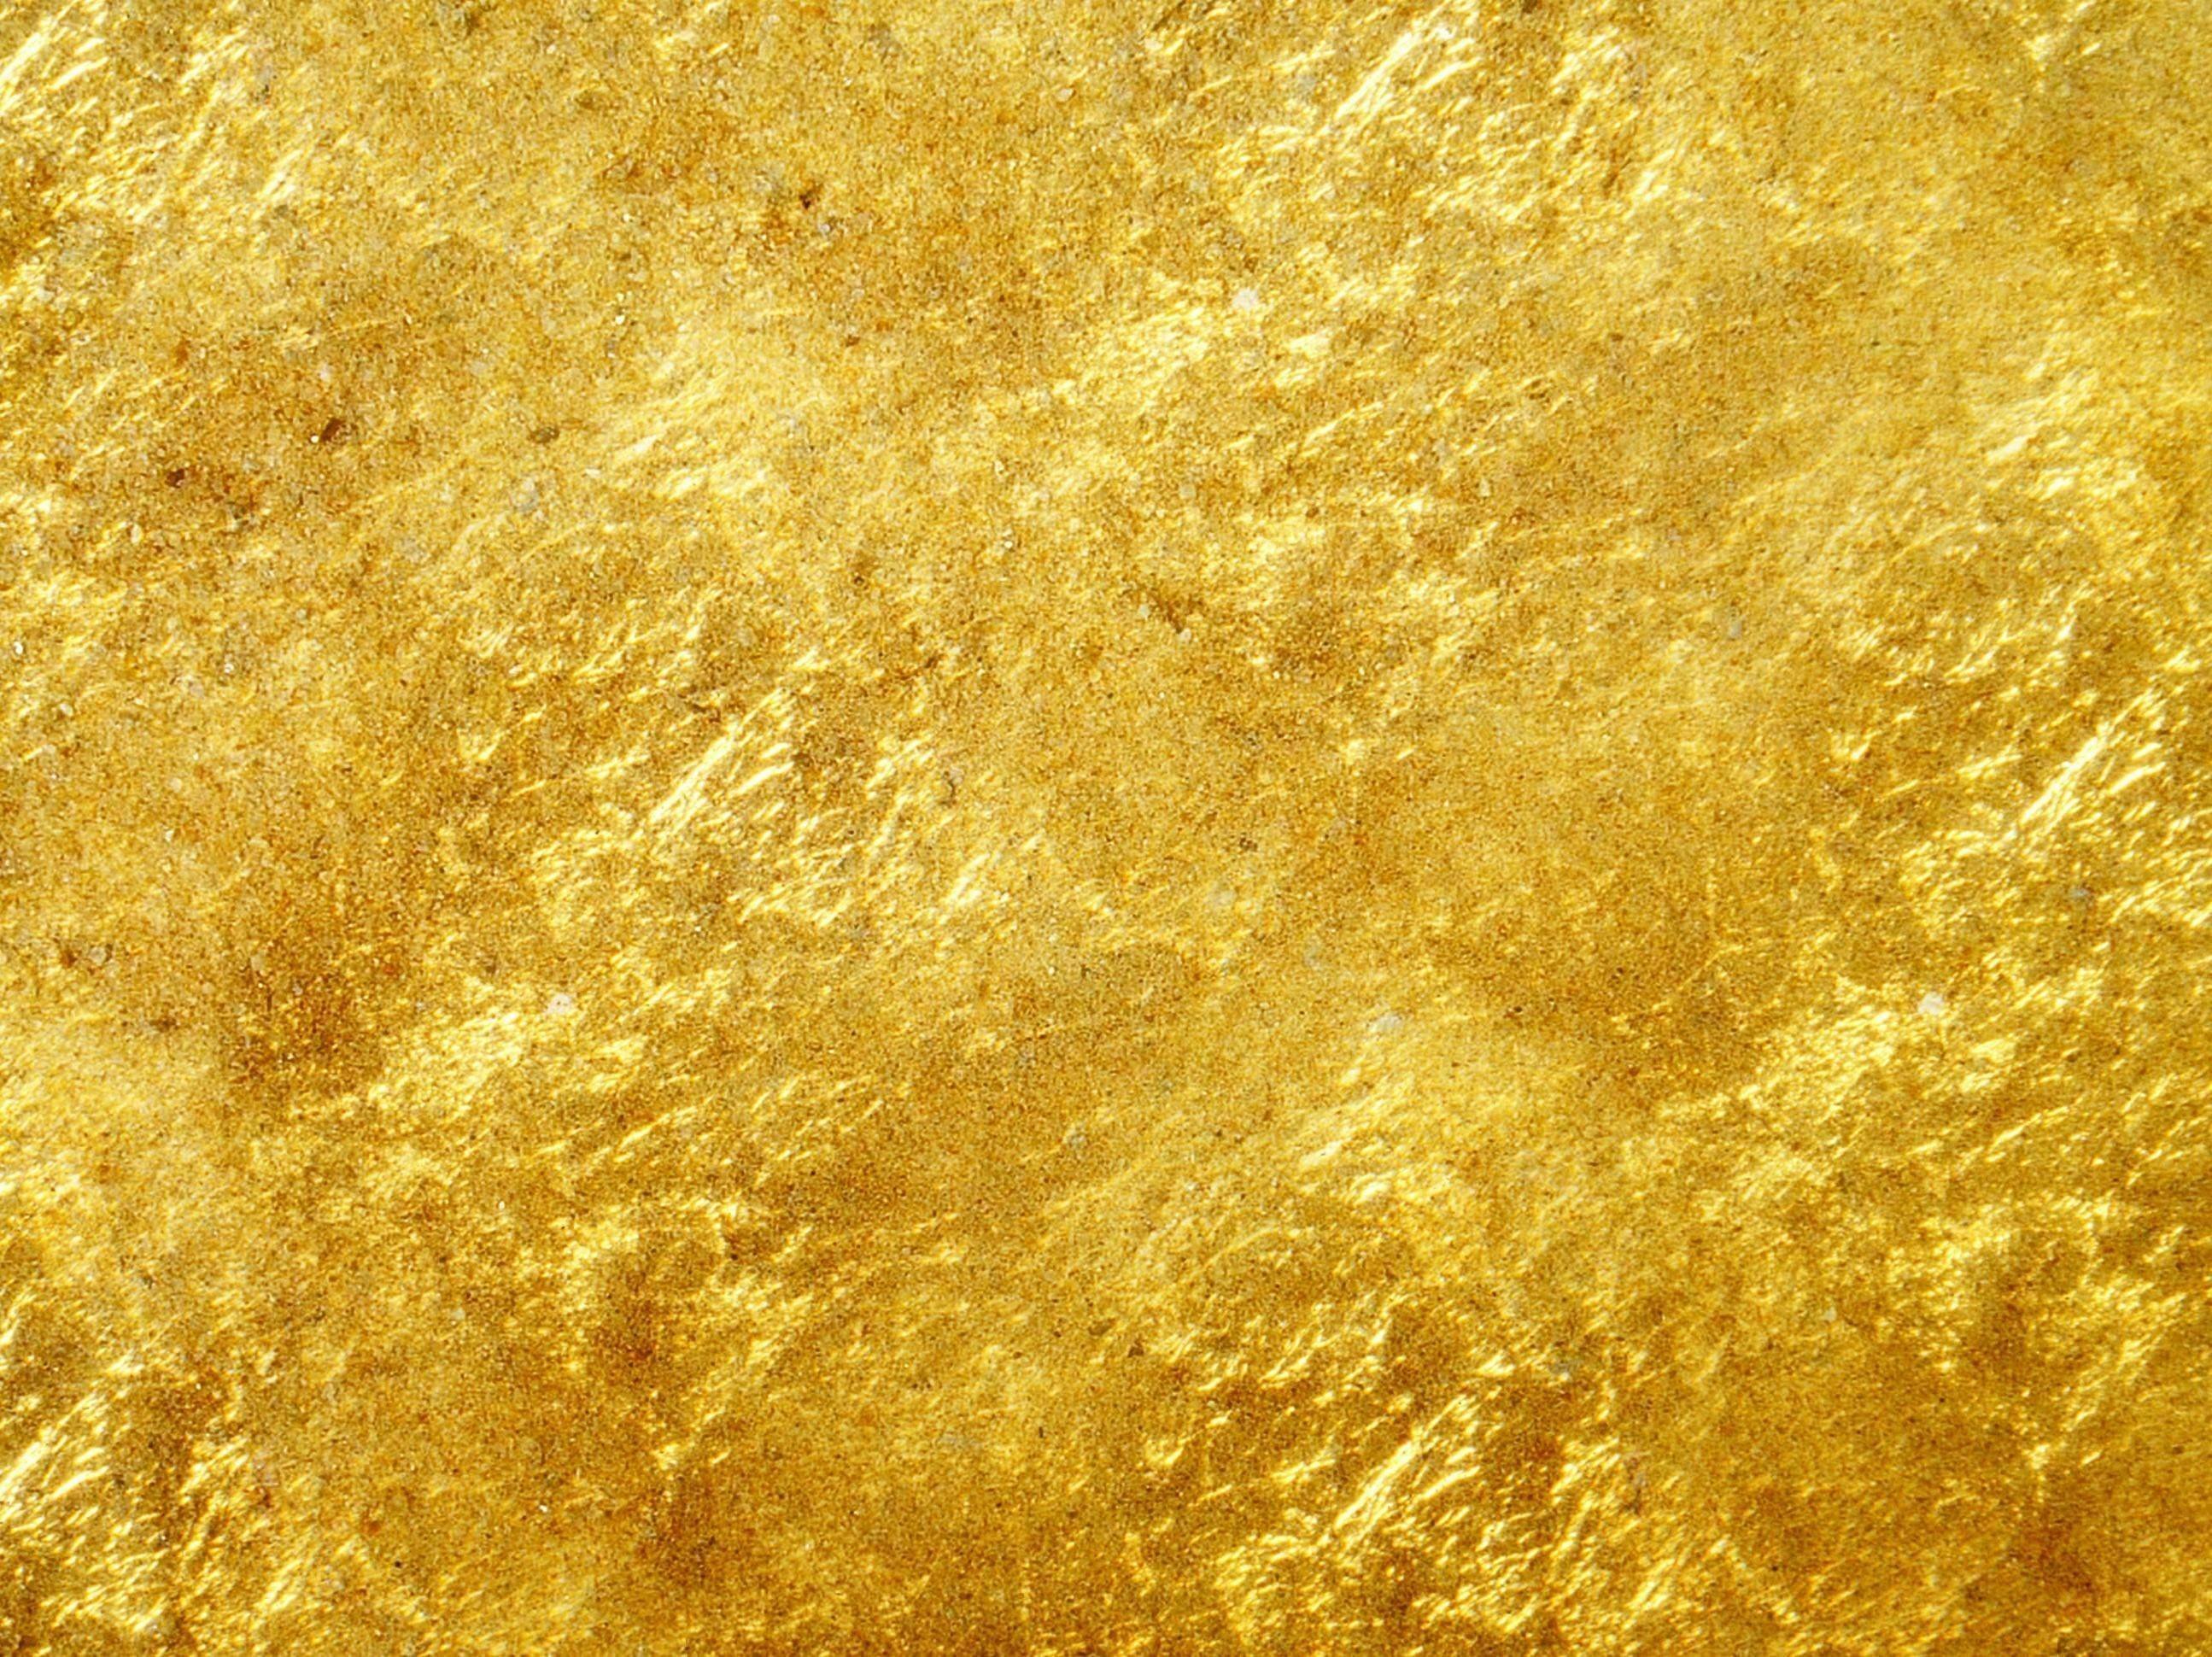 Brushed gold. Золотистый фон. Золото текстура. Состаренное золото. Золото материал.